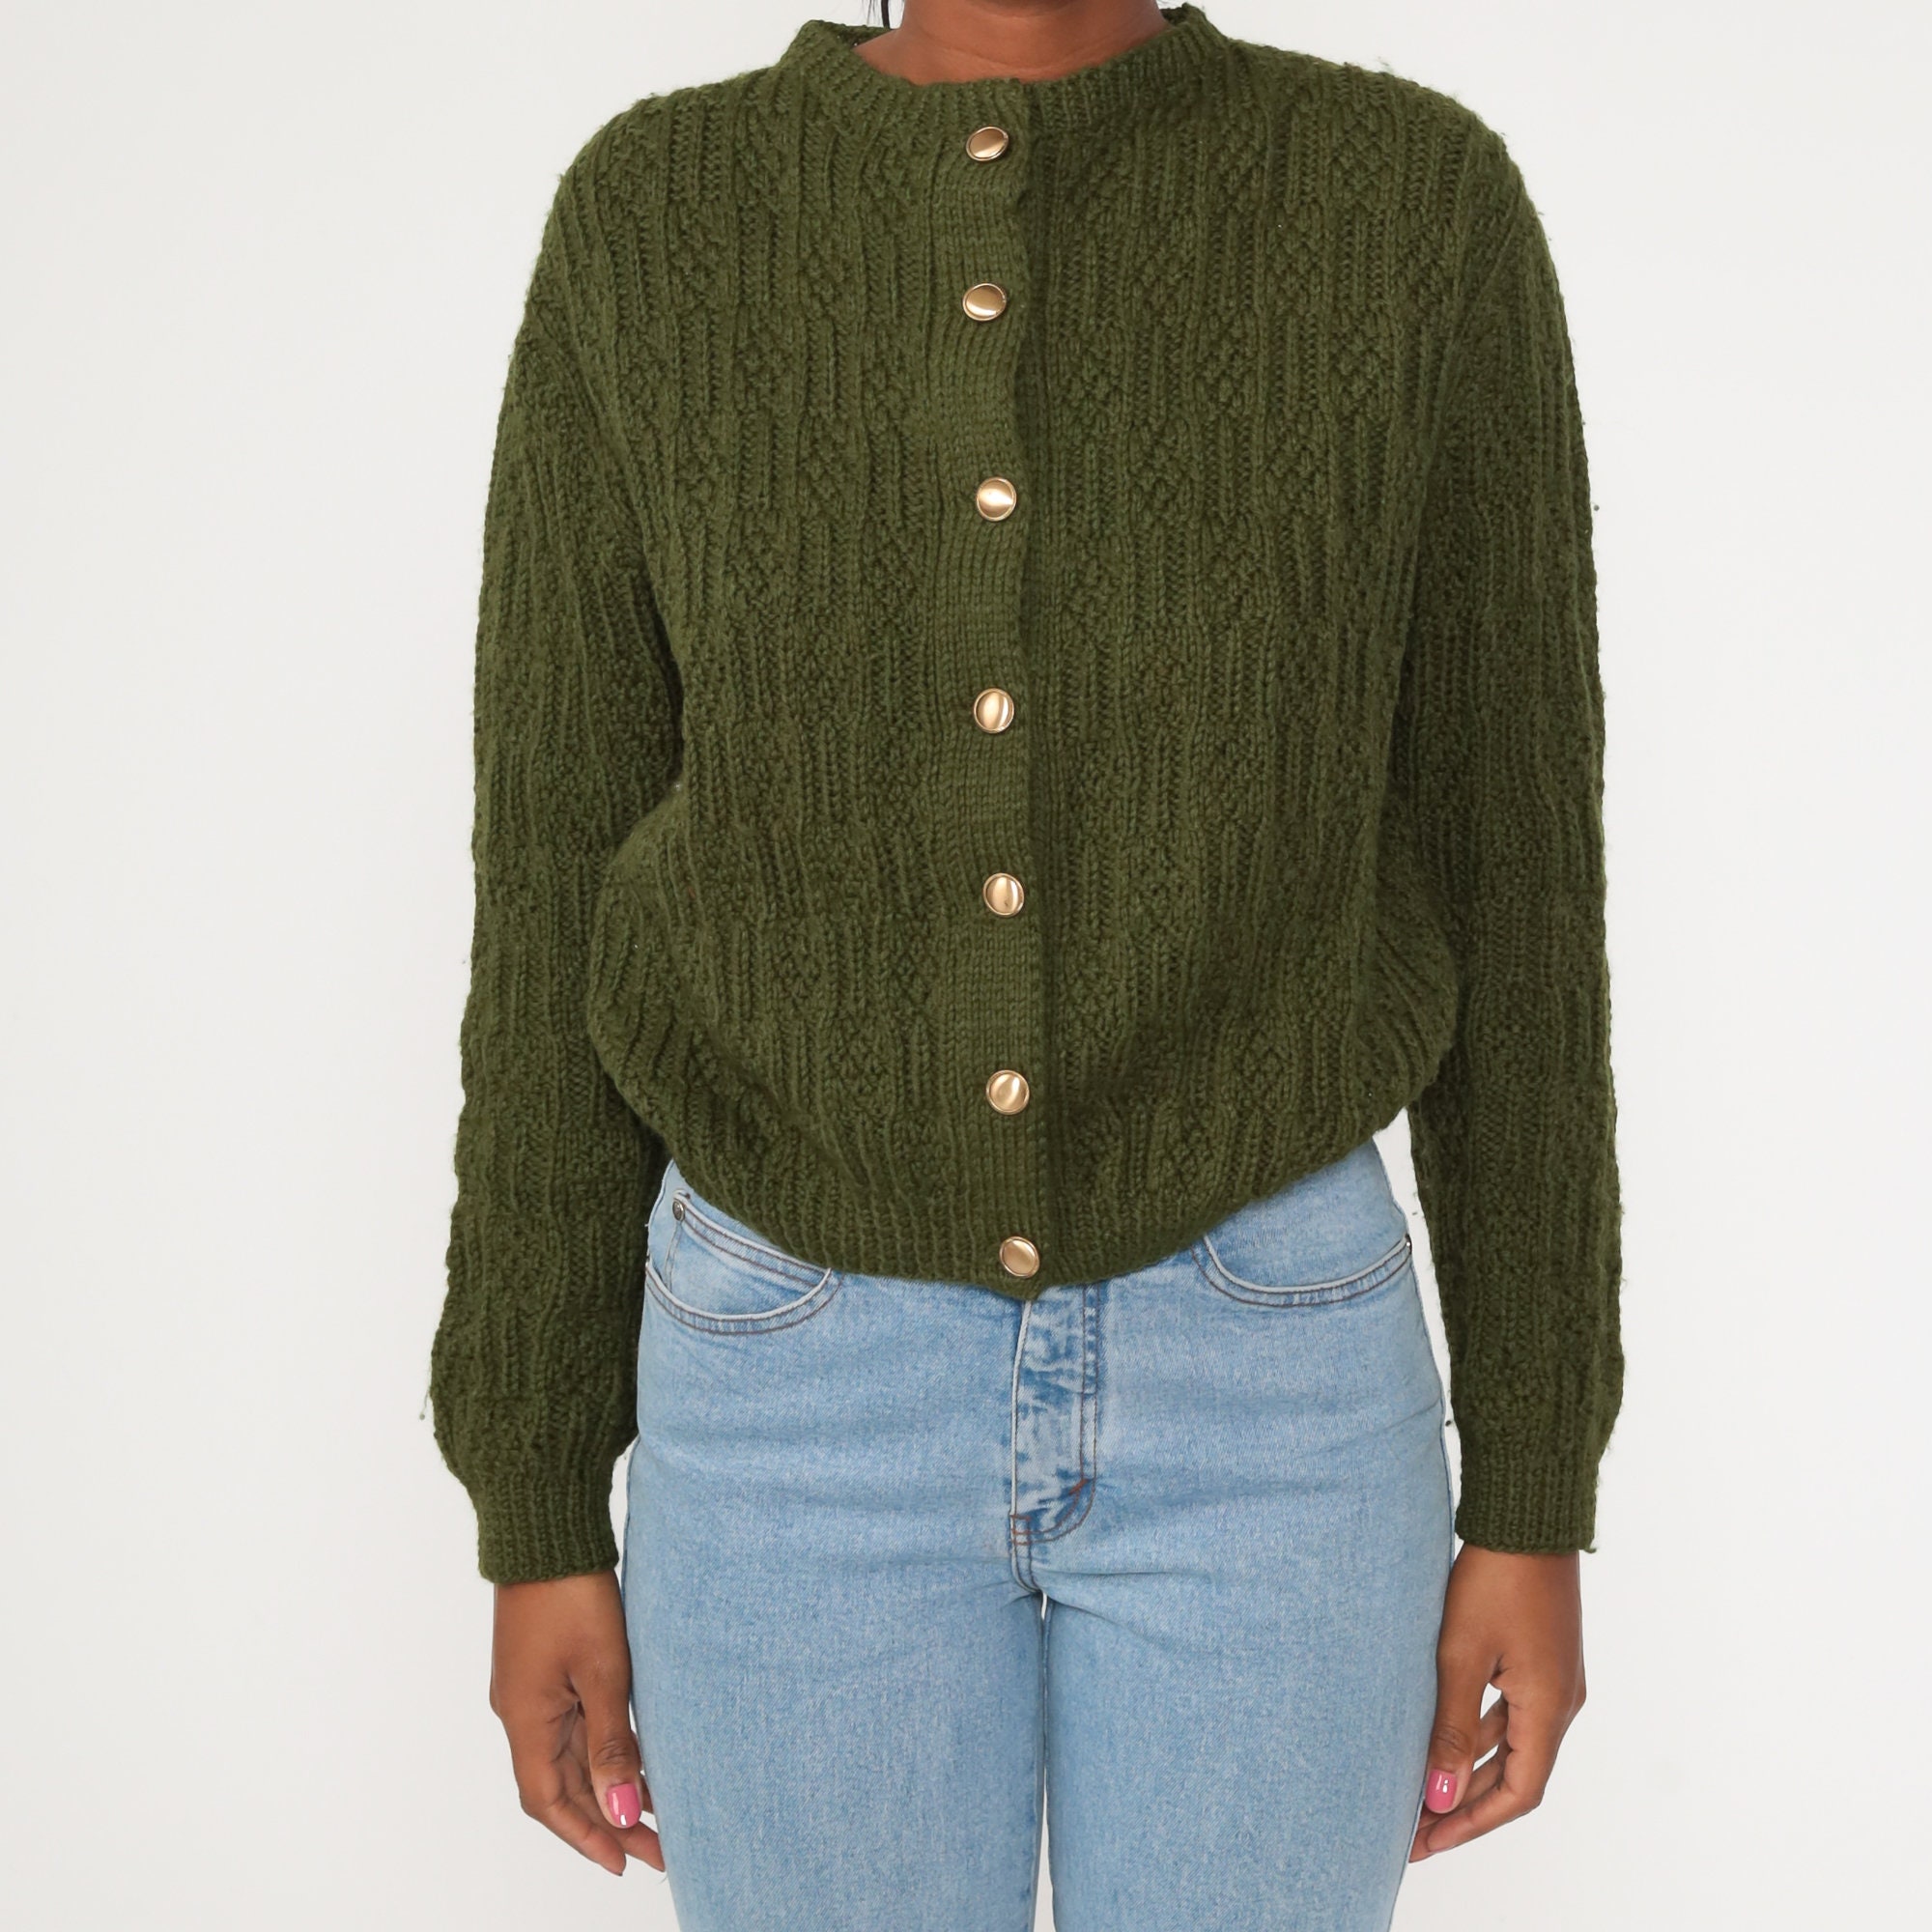 Olive Green Sweater Grandpa Cardigan Boho Sweater Plain Button Up 80s ...